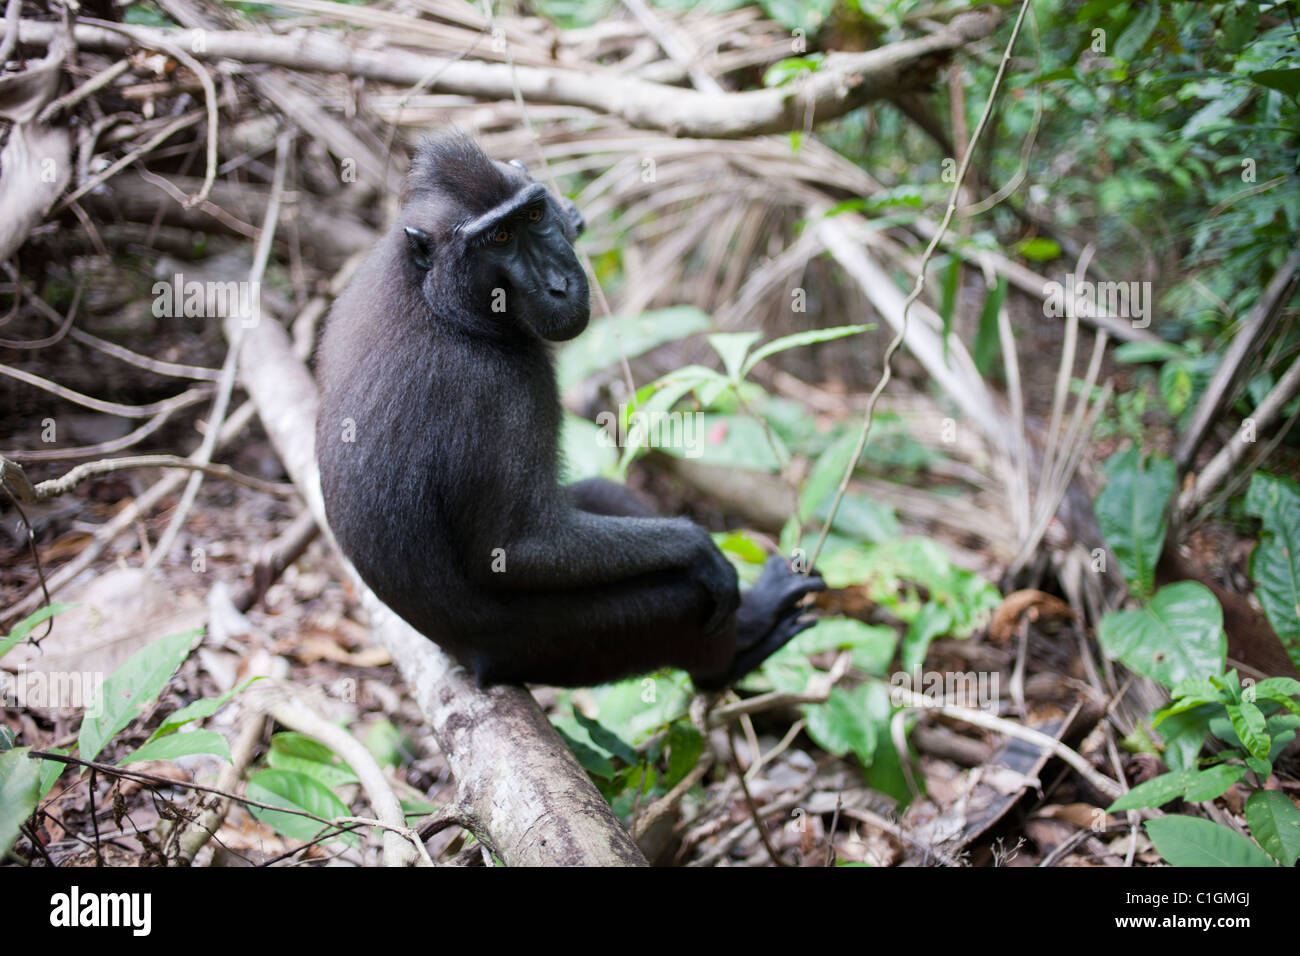 Crested Black Macaque (Macaca nigra) Stock Photo